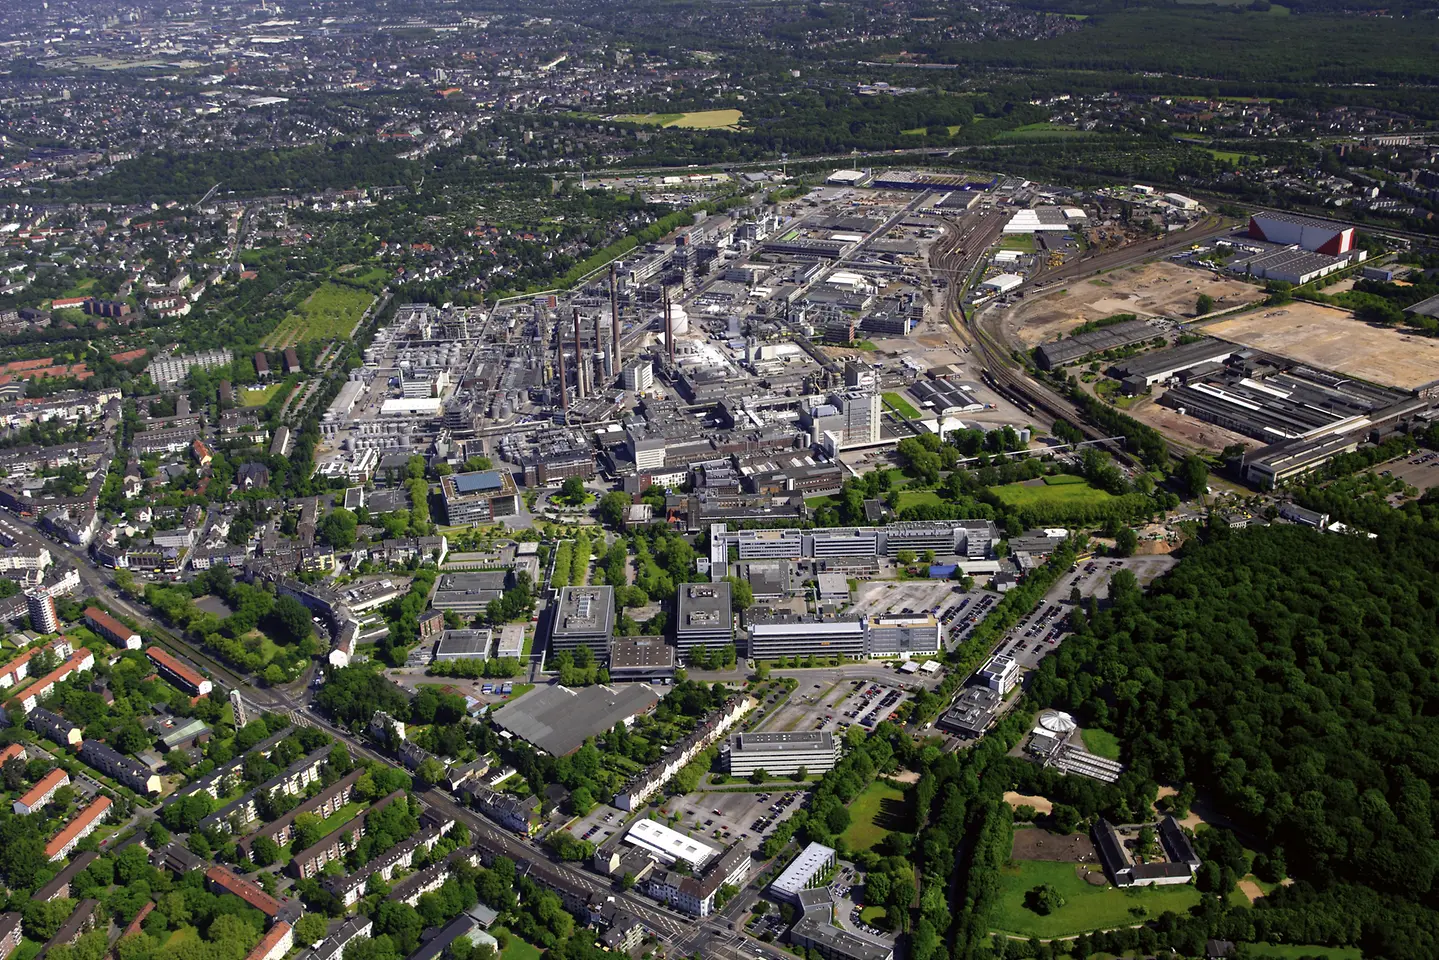 
Vista aérea sede central en Düsseldorf